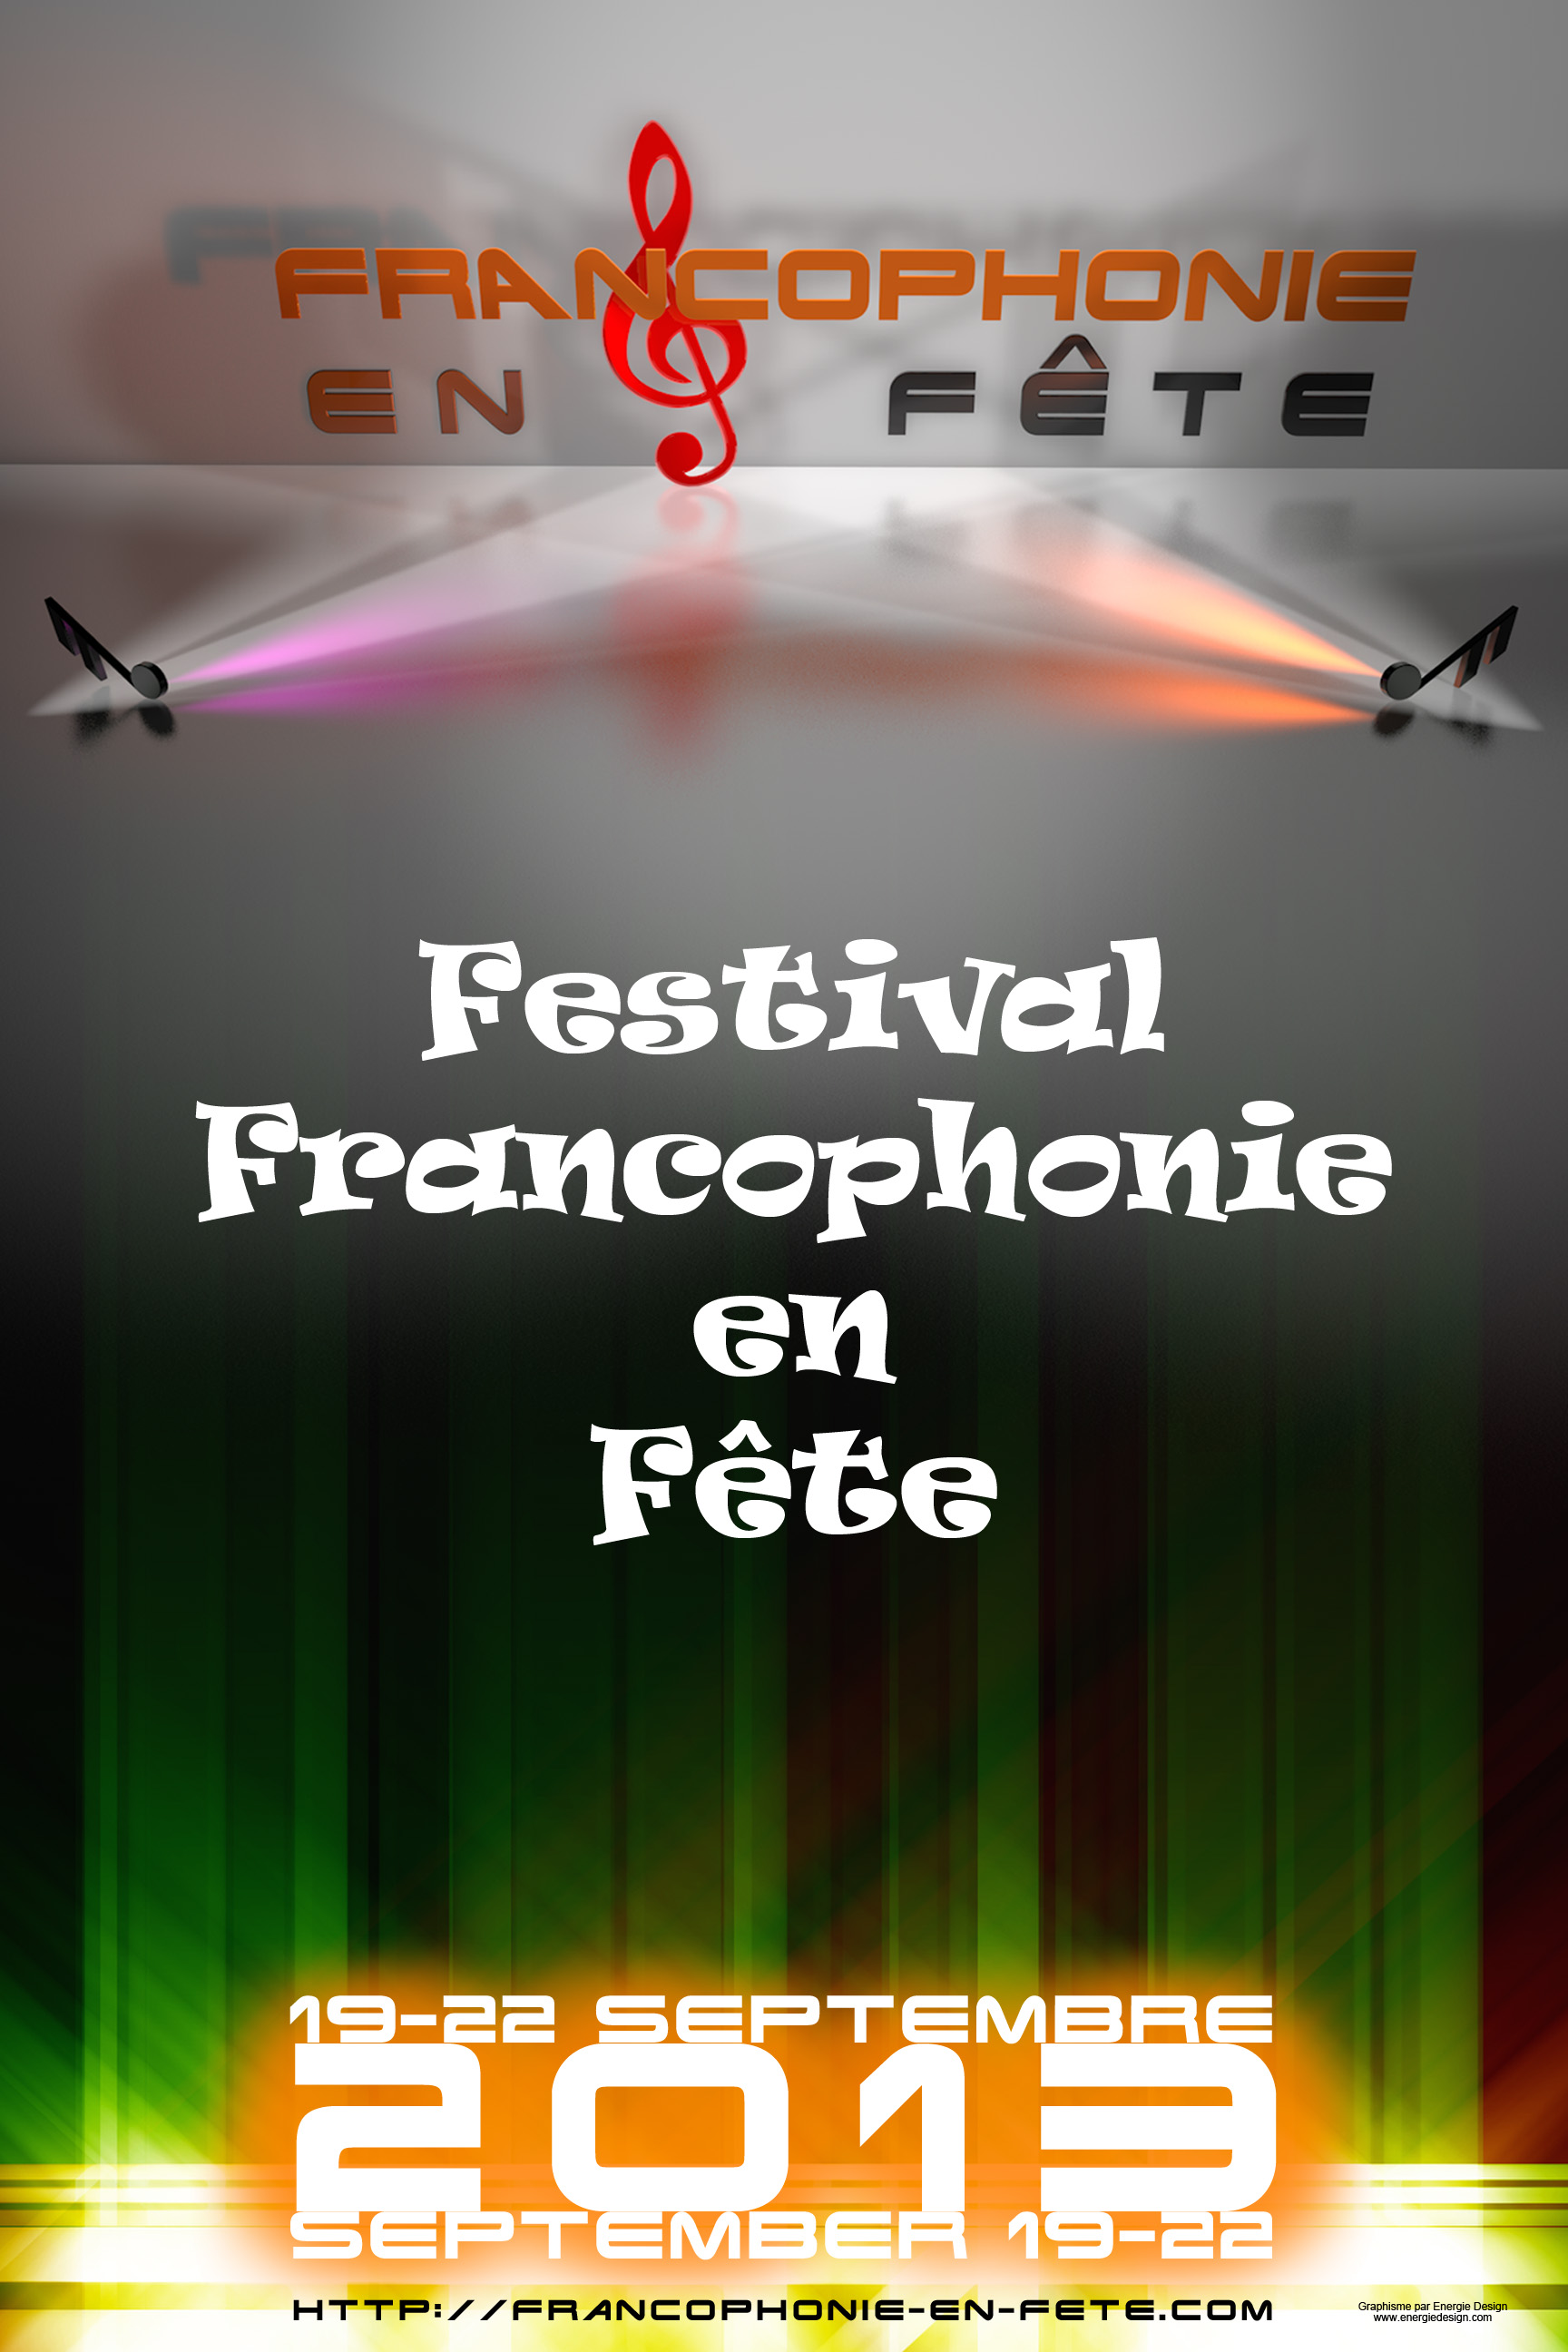 Francophonie en fête poster 2013